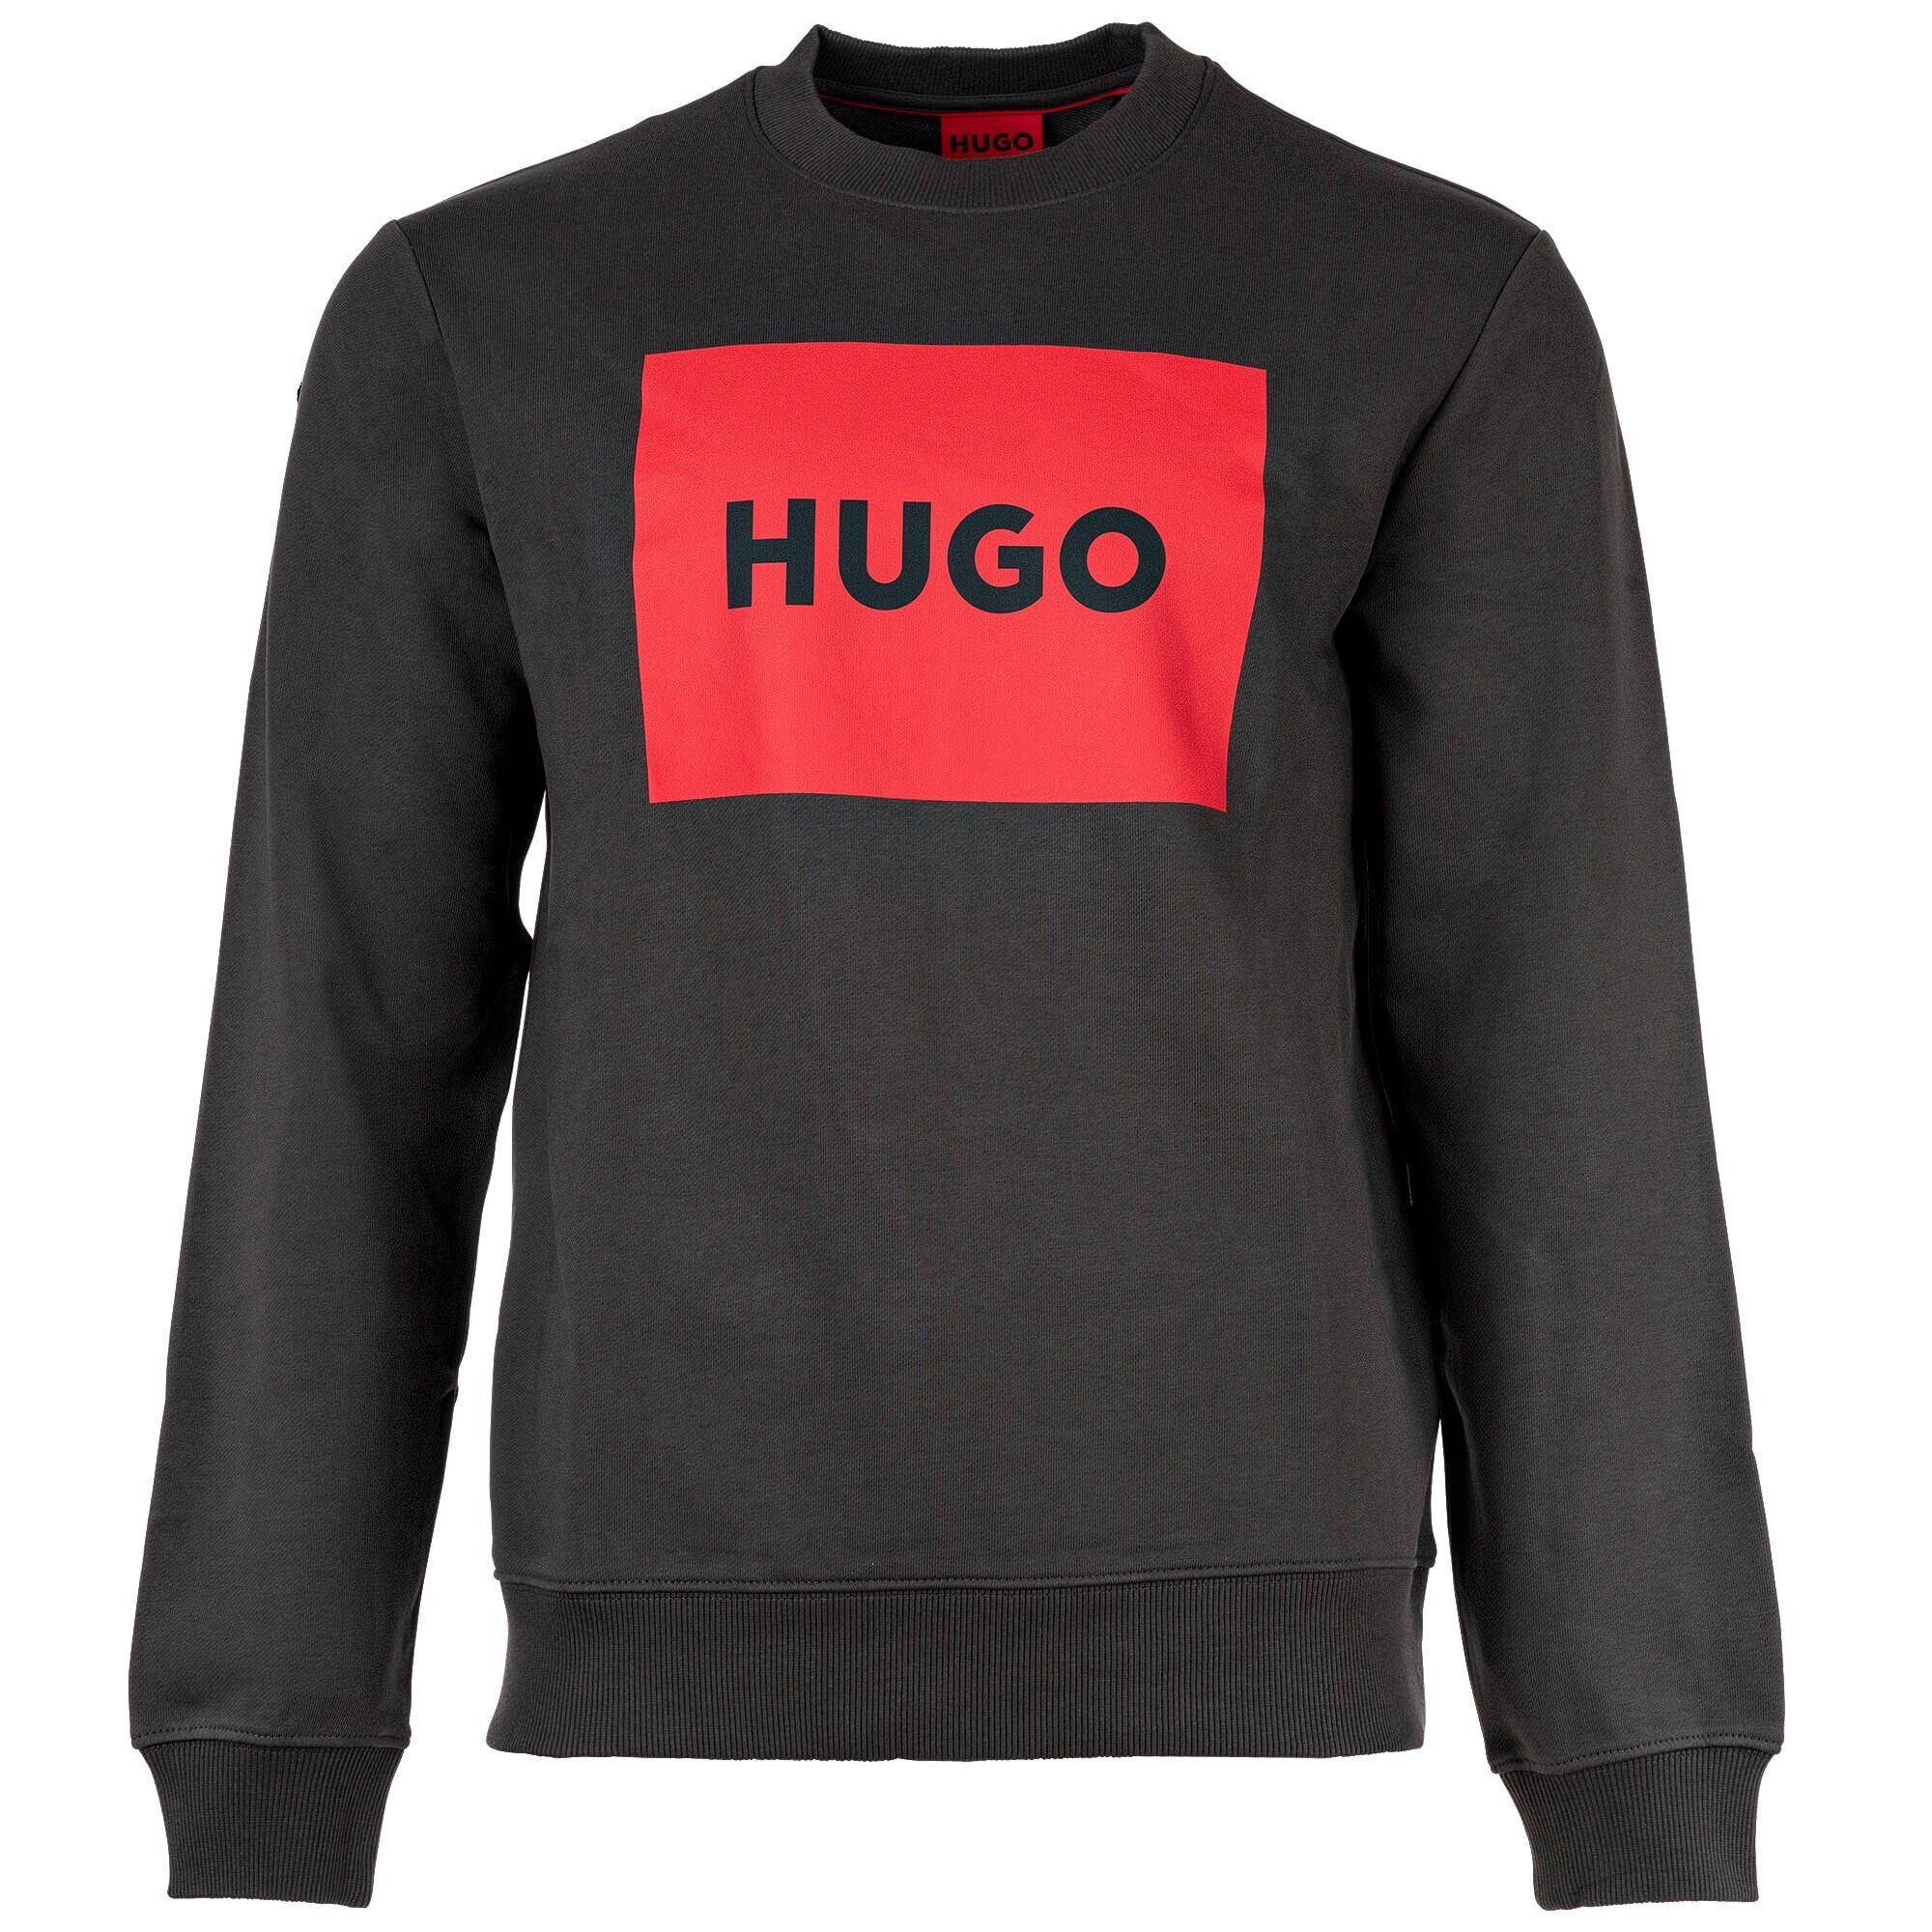 - HUGO Duragol222, Sweater Herren Sweatshirt Sweatshirt, Dunkelgrau Rundhals